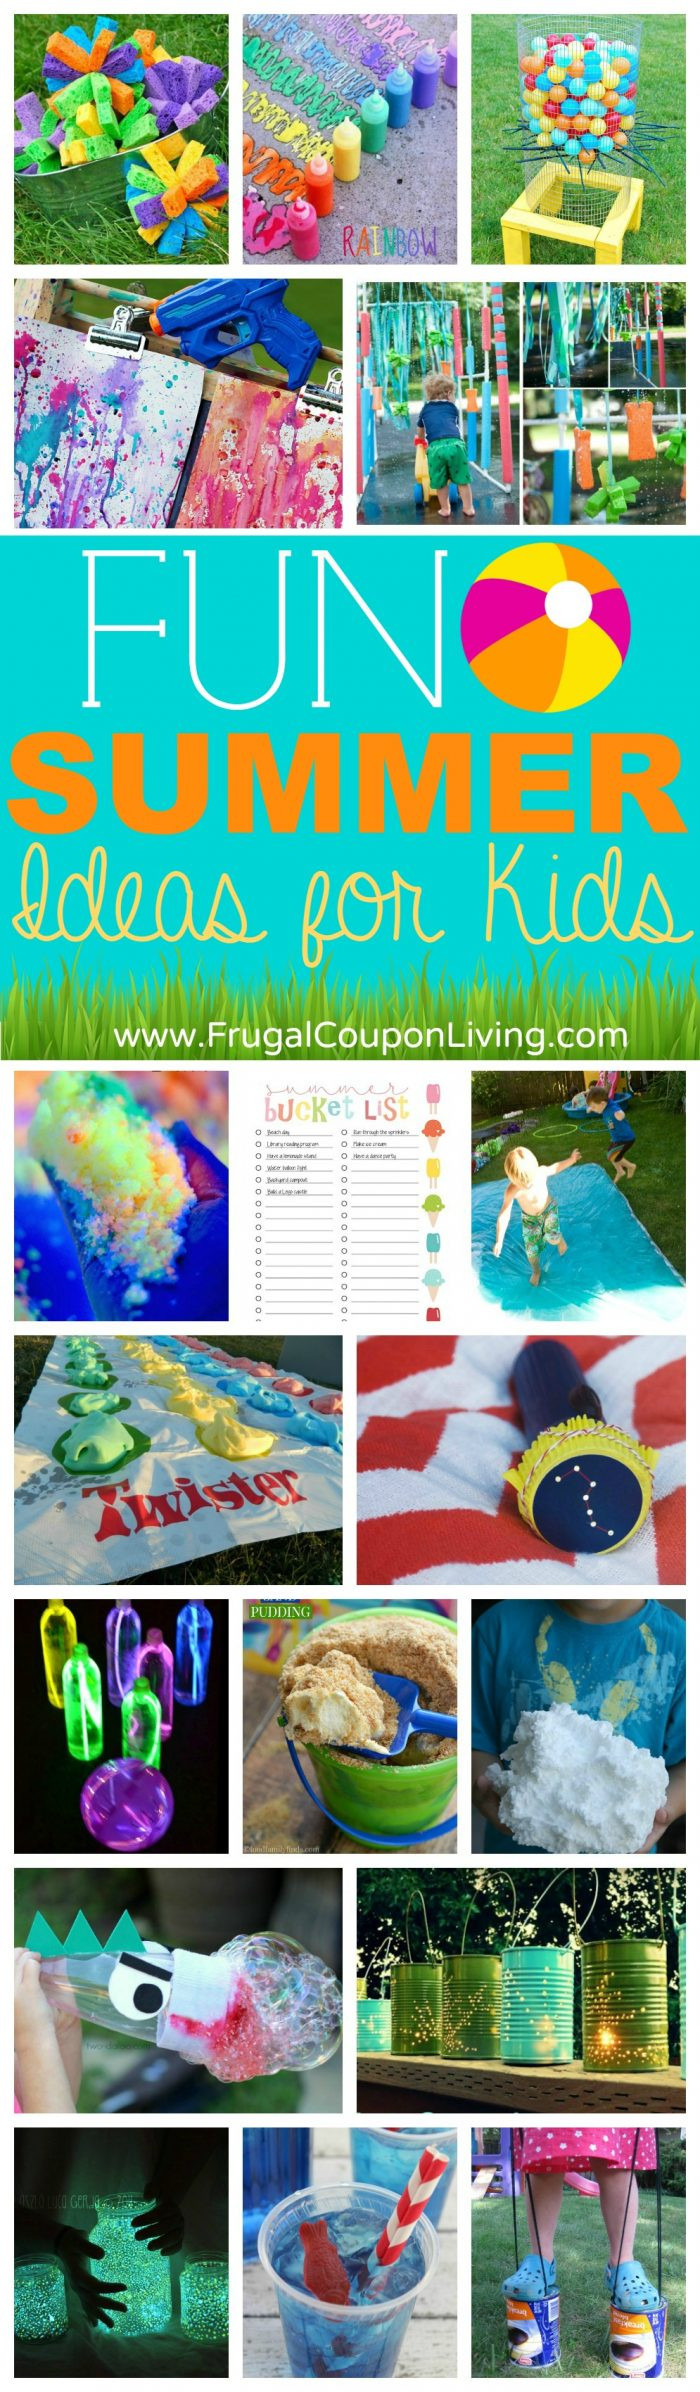 Fun Ideas For Kids
 DIY Summer Fun Ideas for Kids